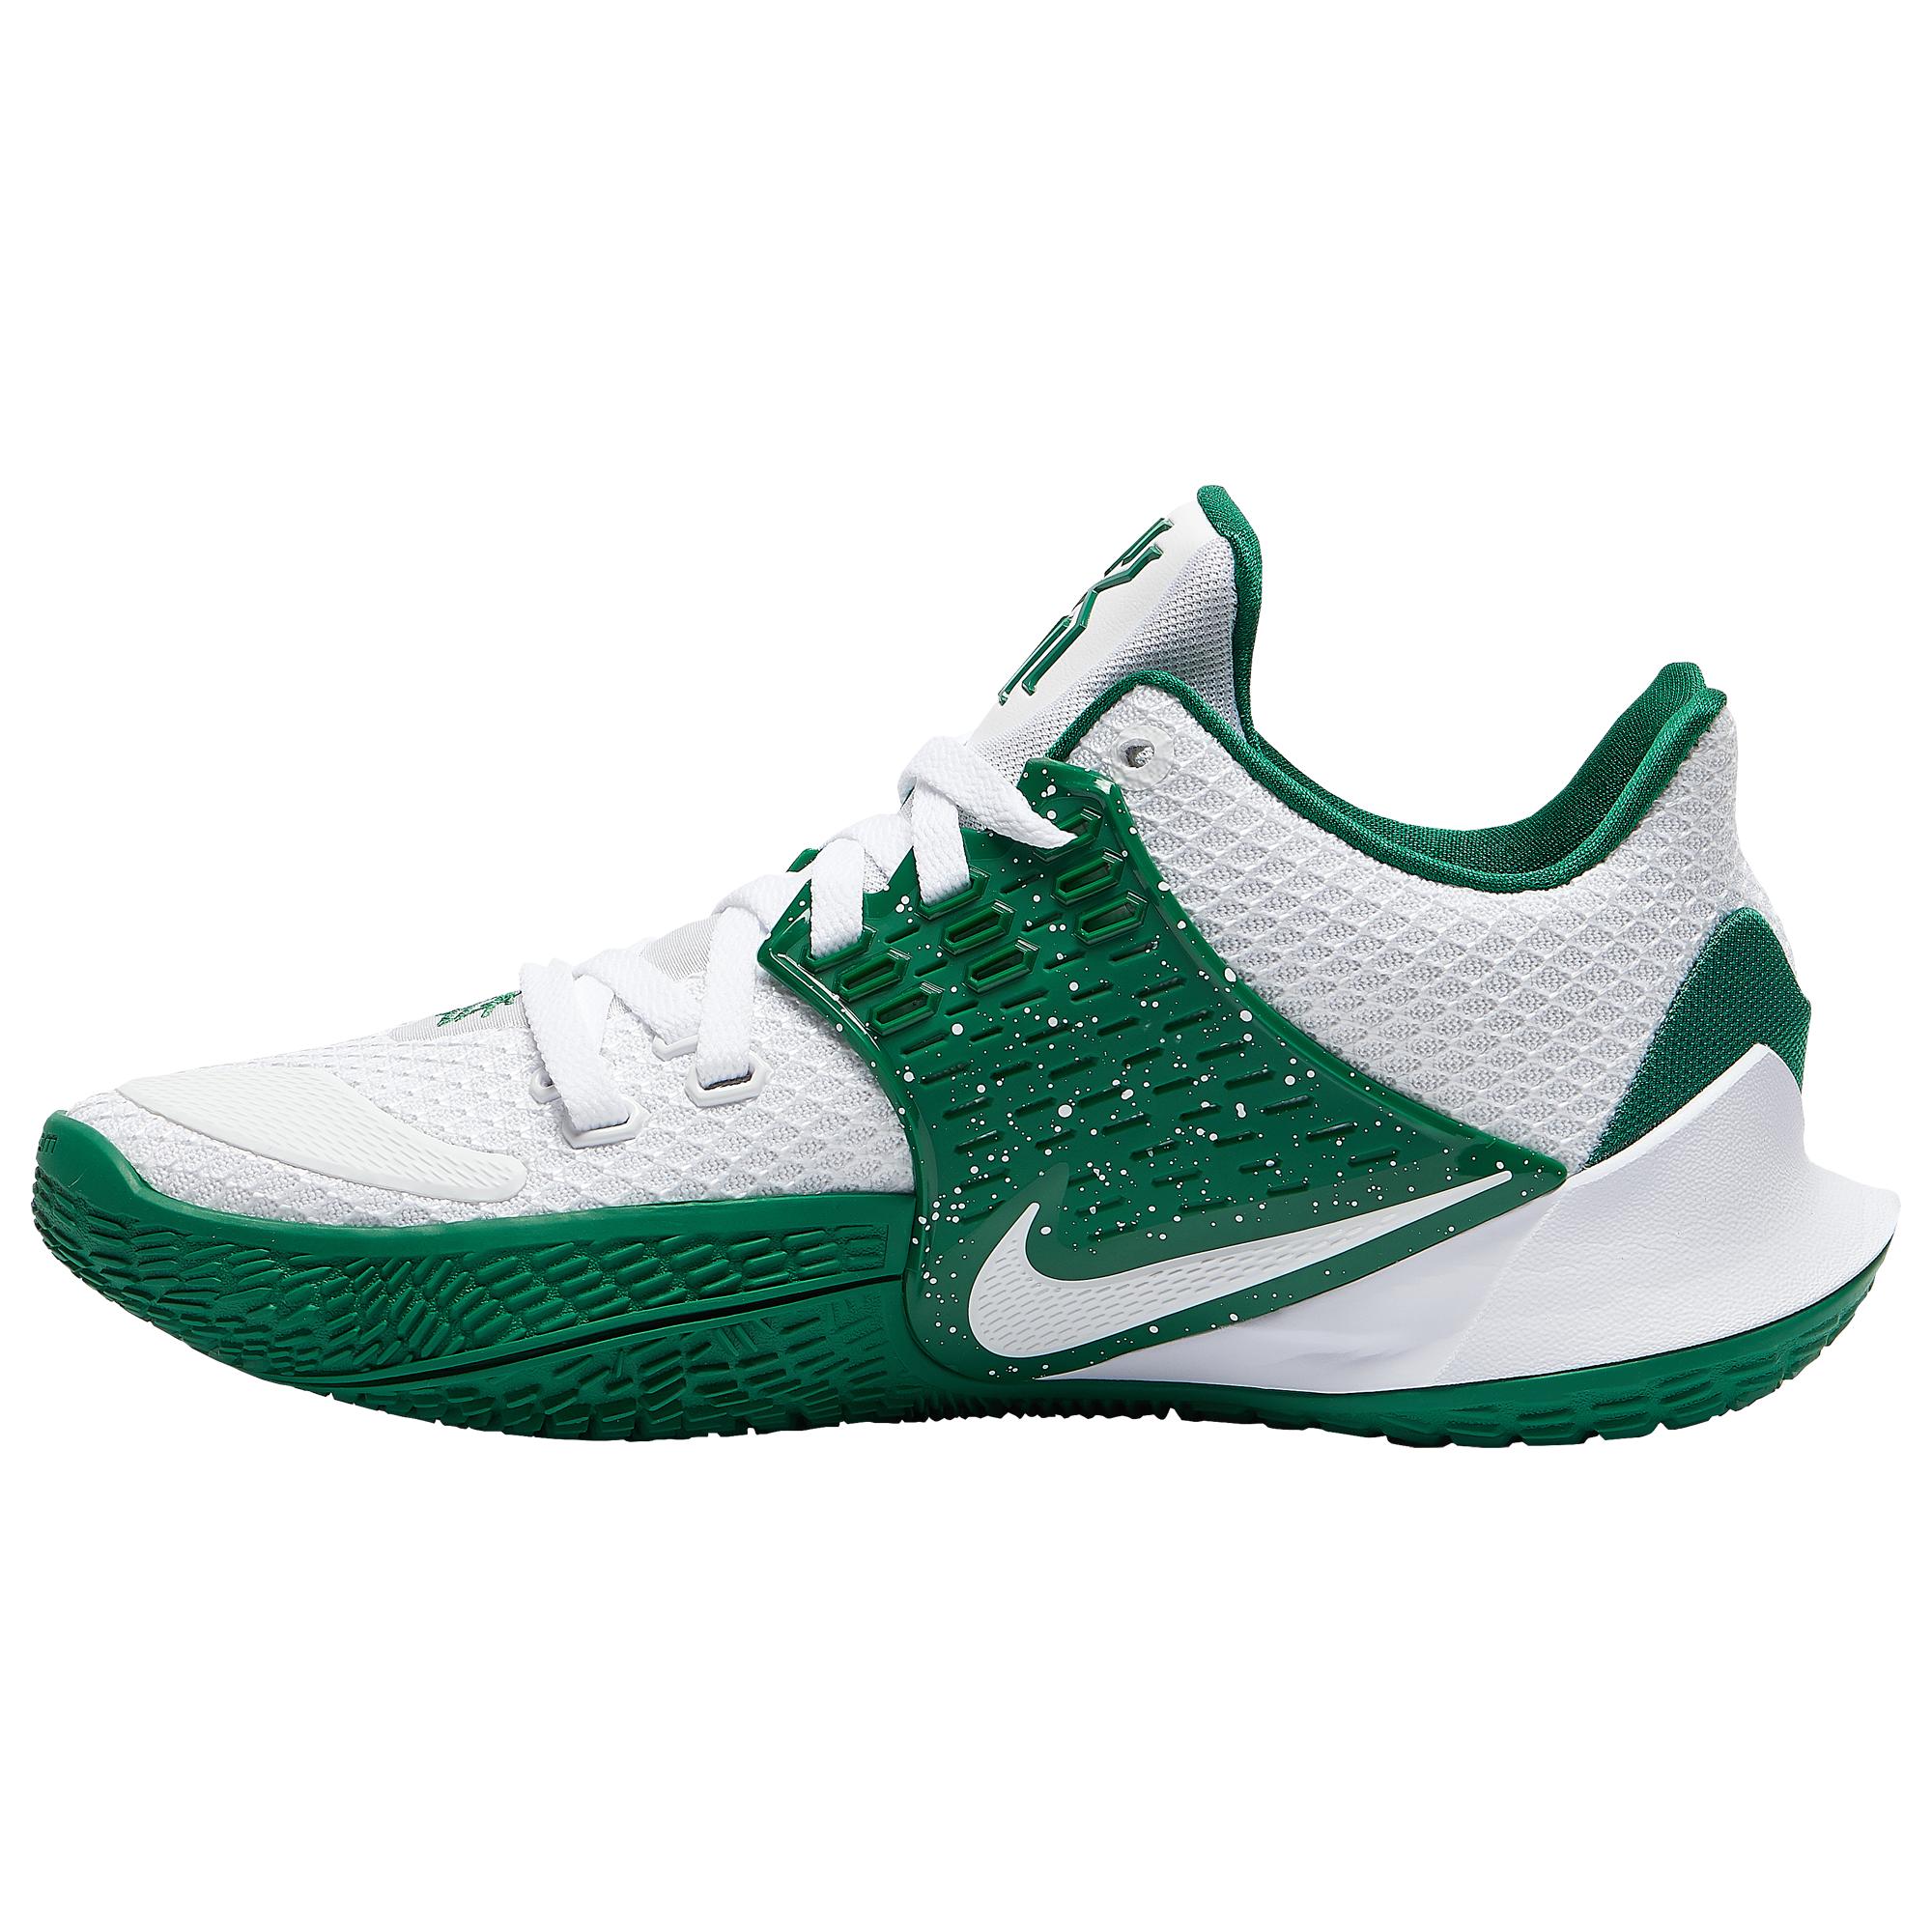 Nike Kyrie Low 2 in Green for Men - Lyst